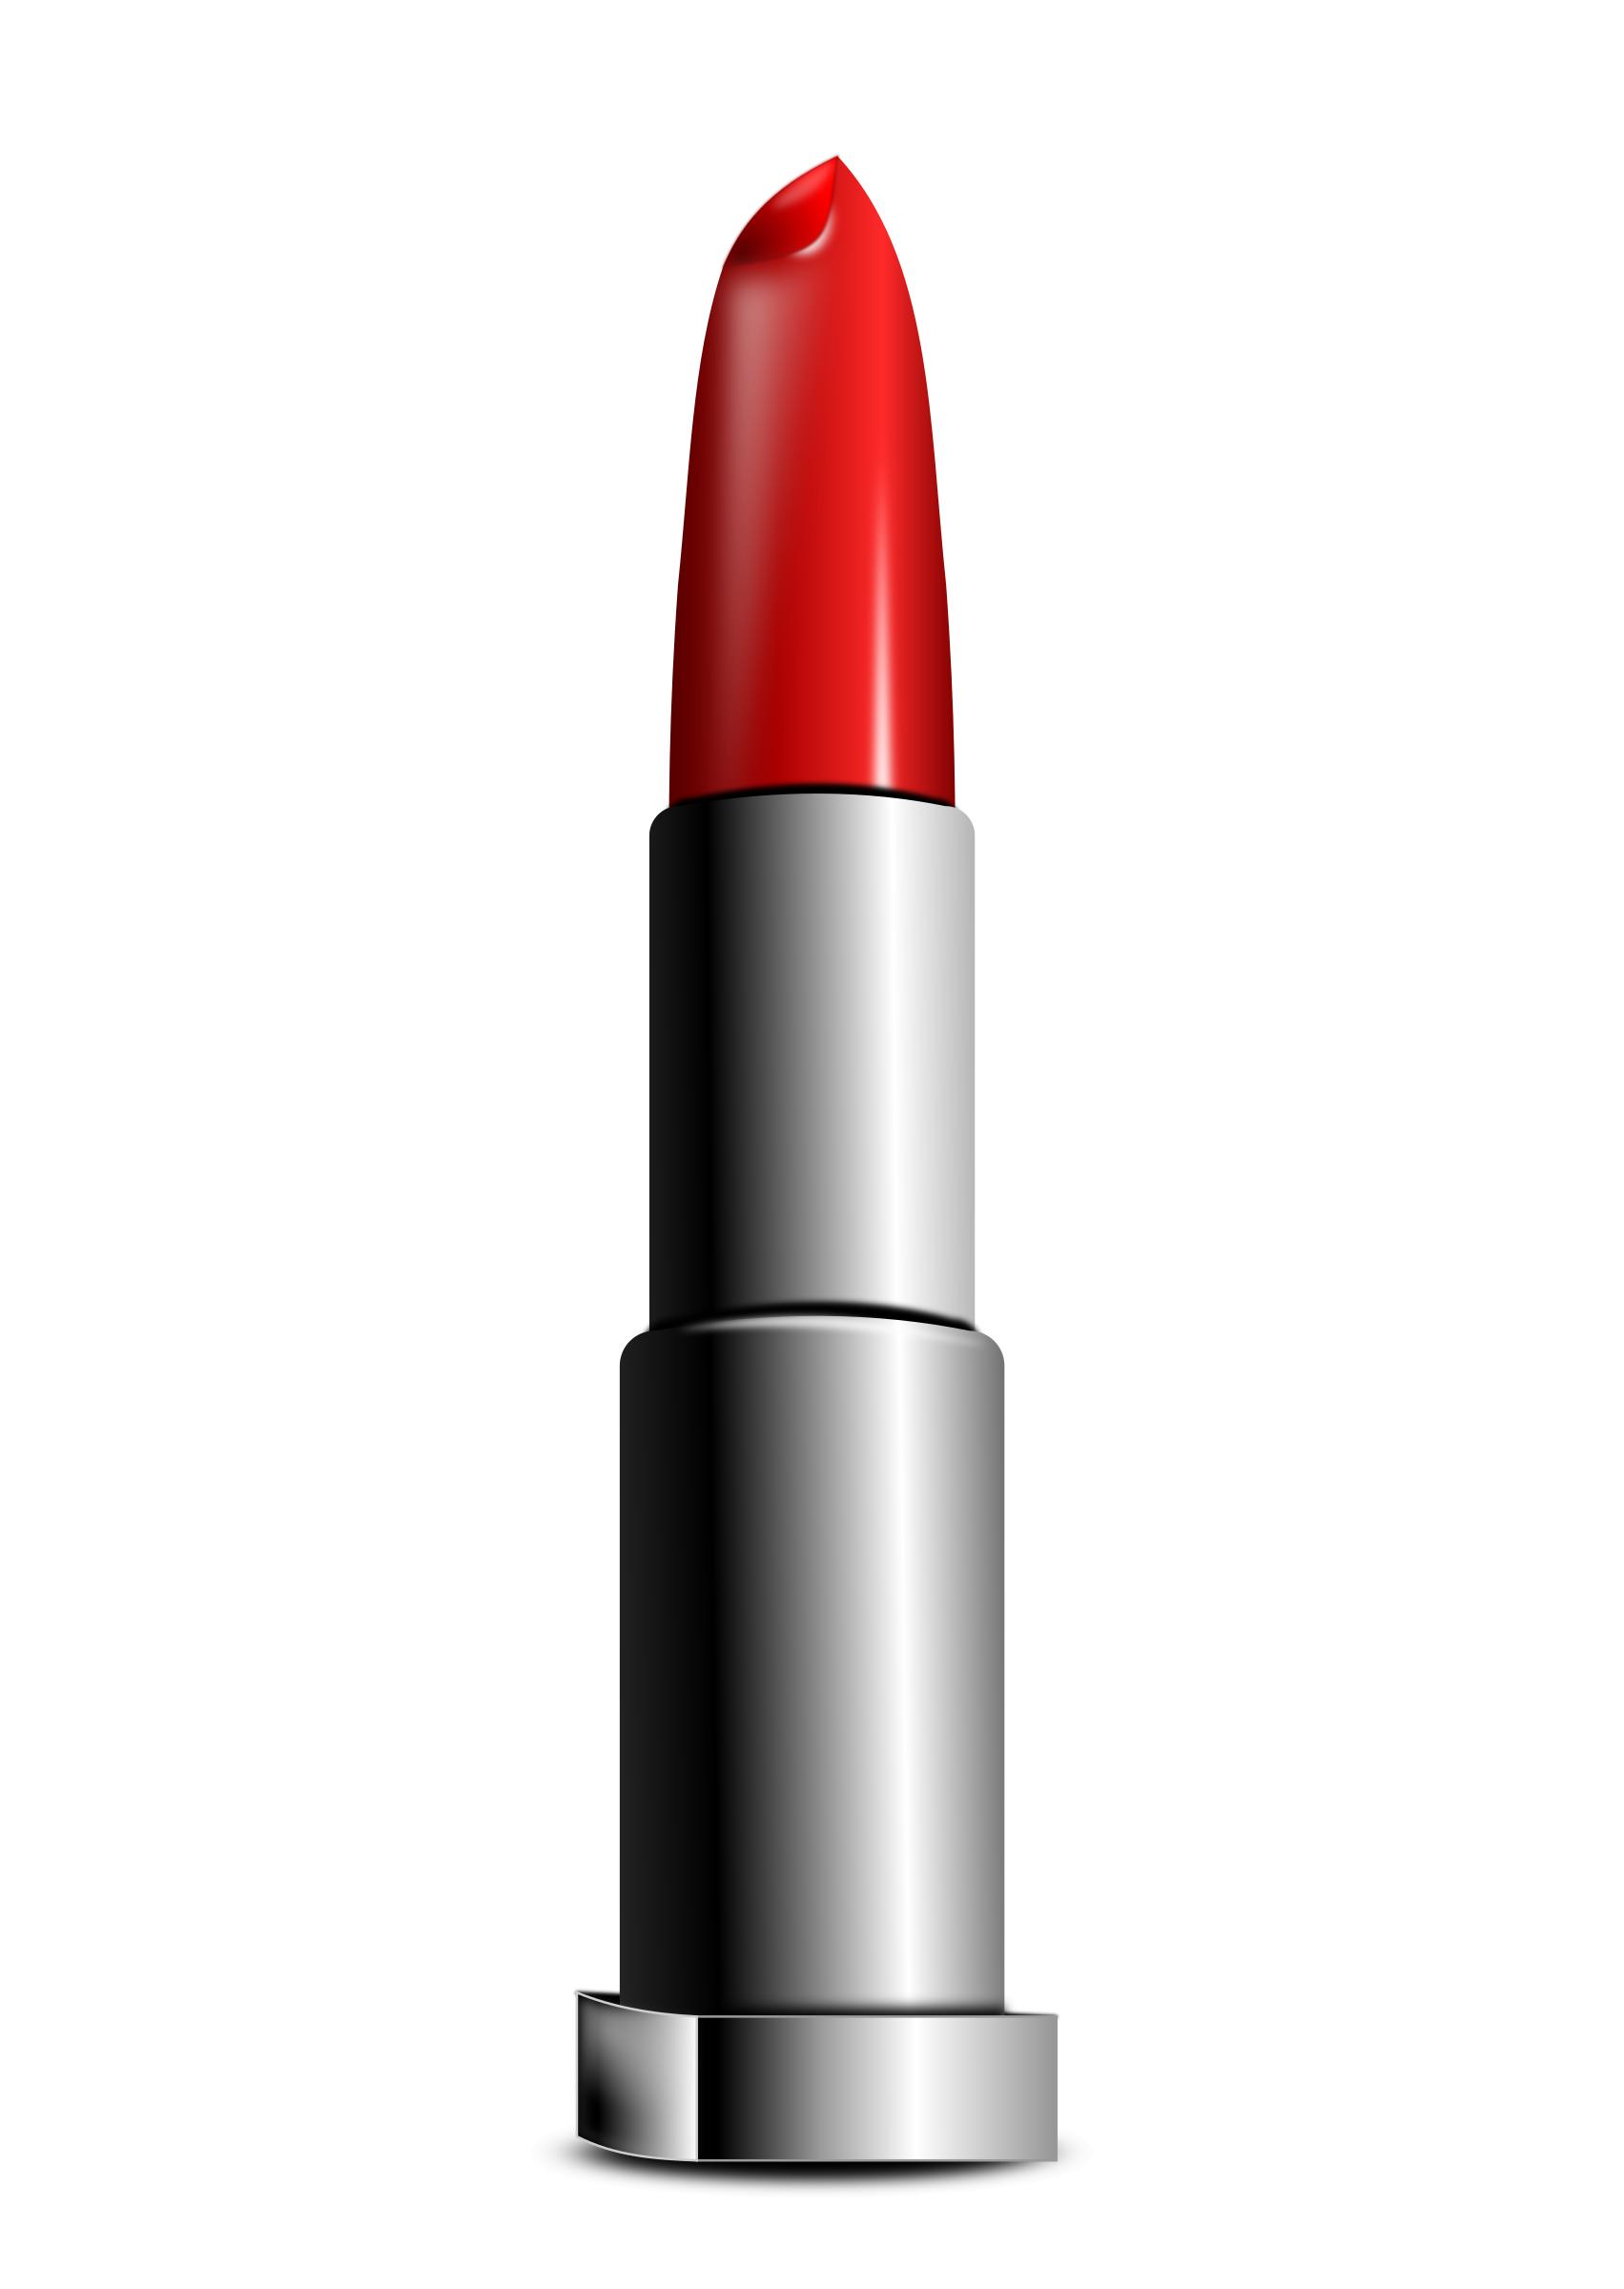 Lipstick Model icons